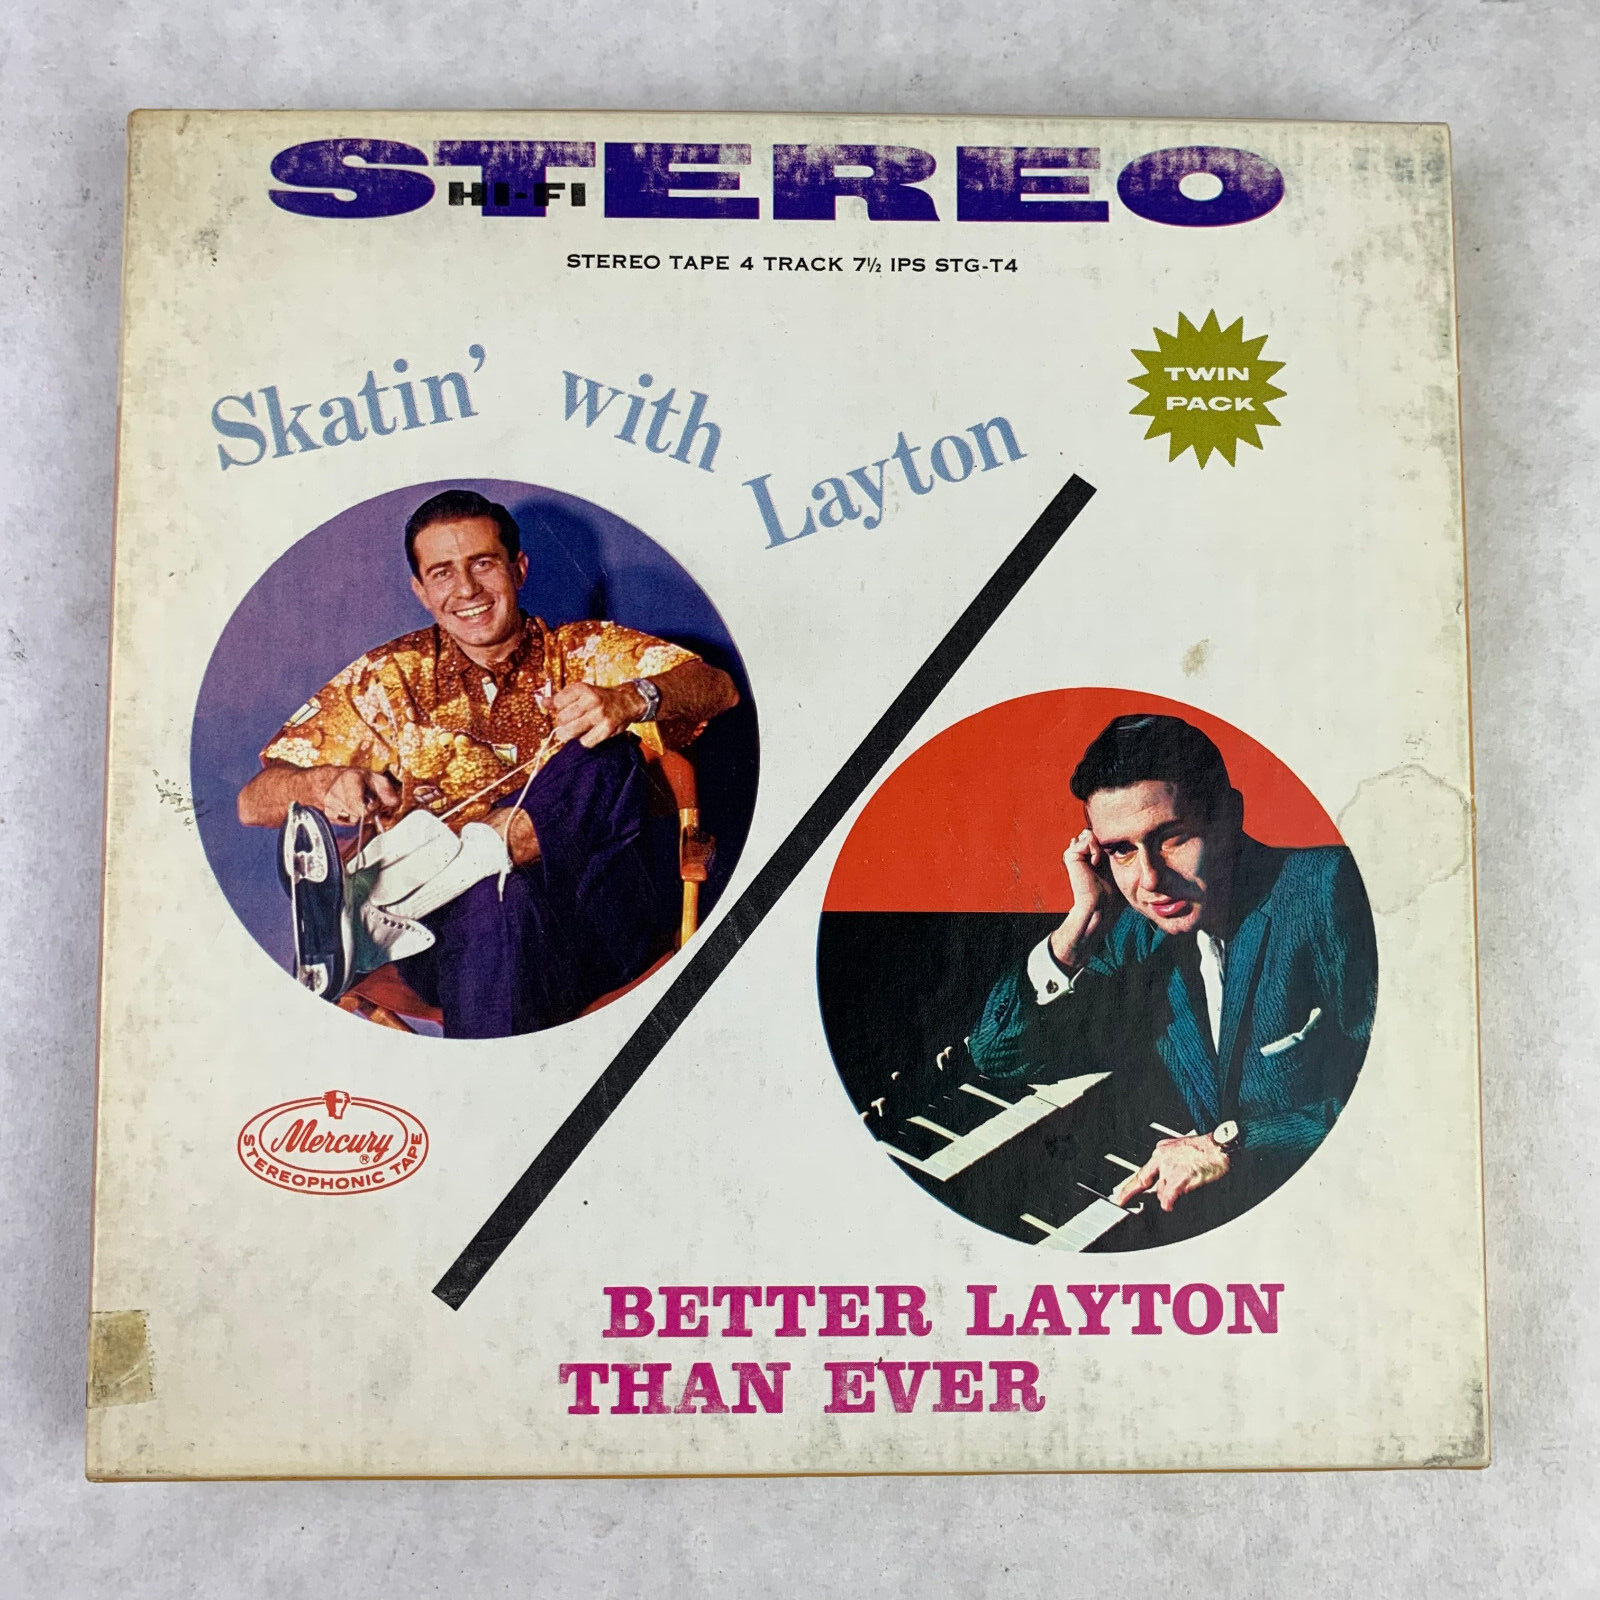 Skatin with Eddie Layton Better Layton Than Ever 4 Track 7.5 IPS Reel Music Tape